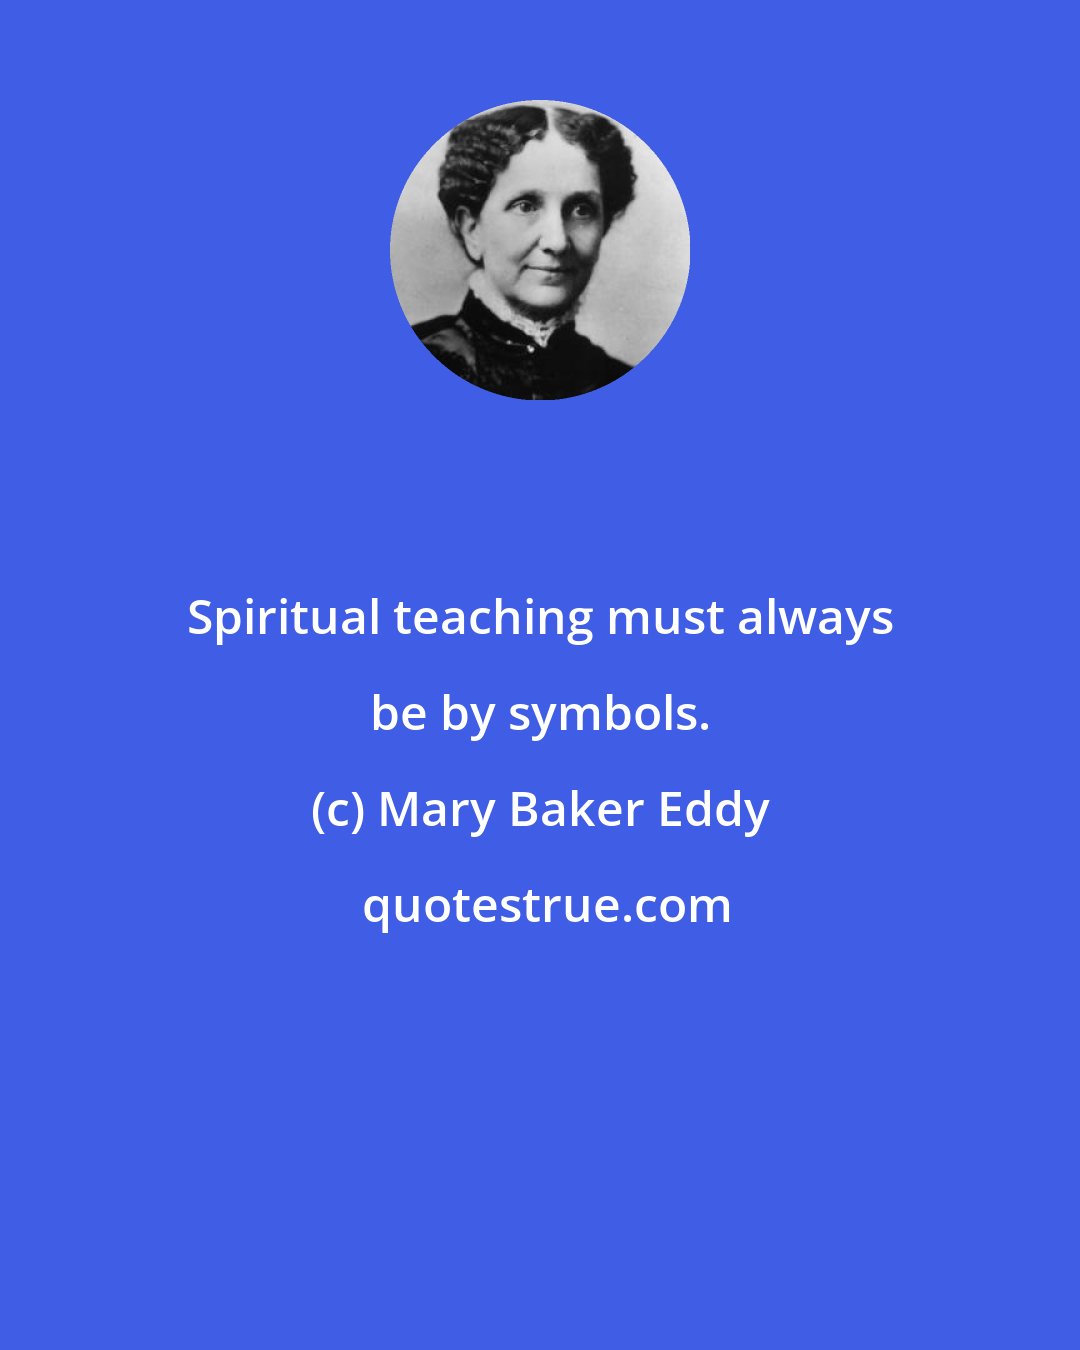 Mary Baker Eddy: Spiritual teaching must always be by symbols.